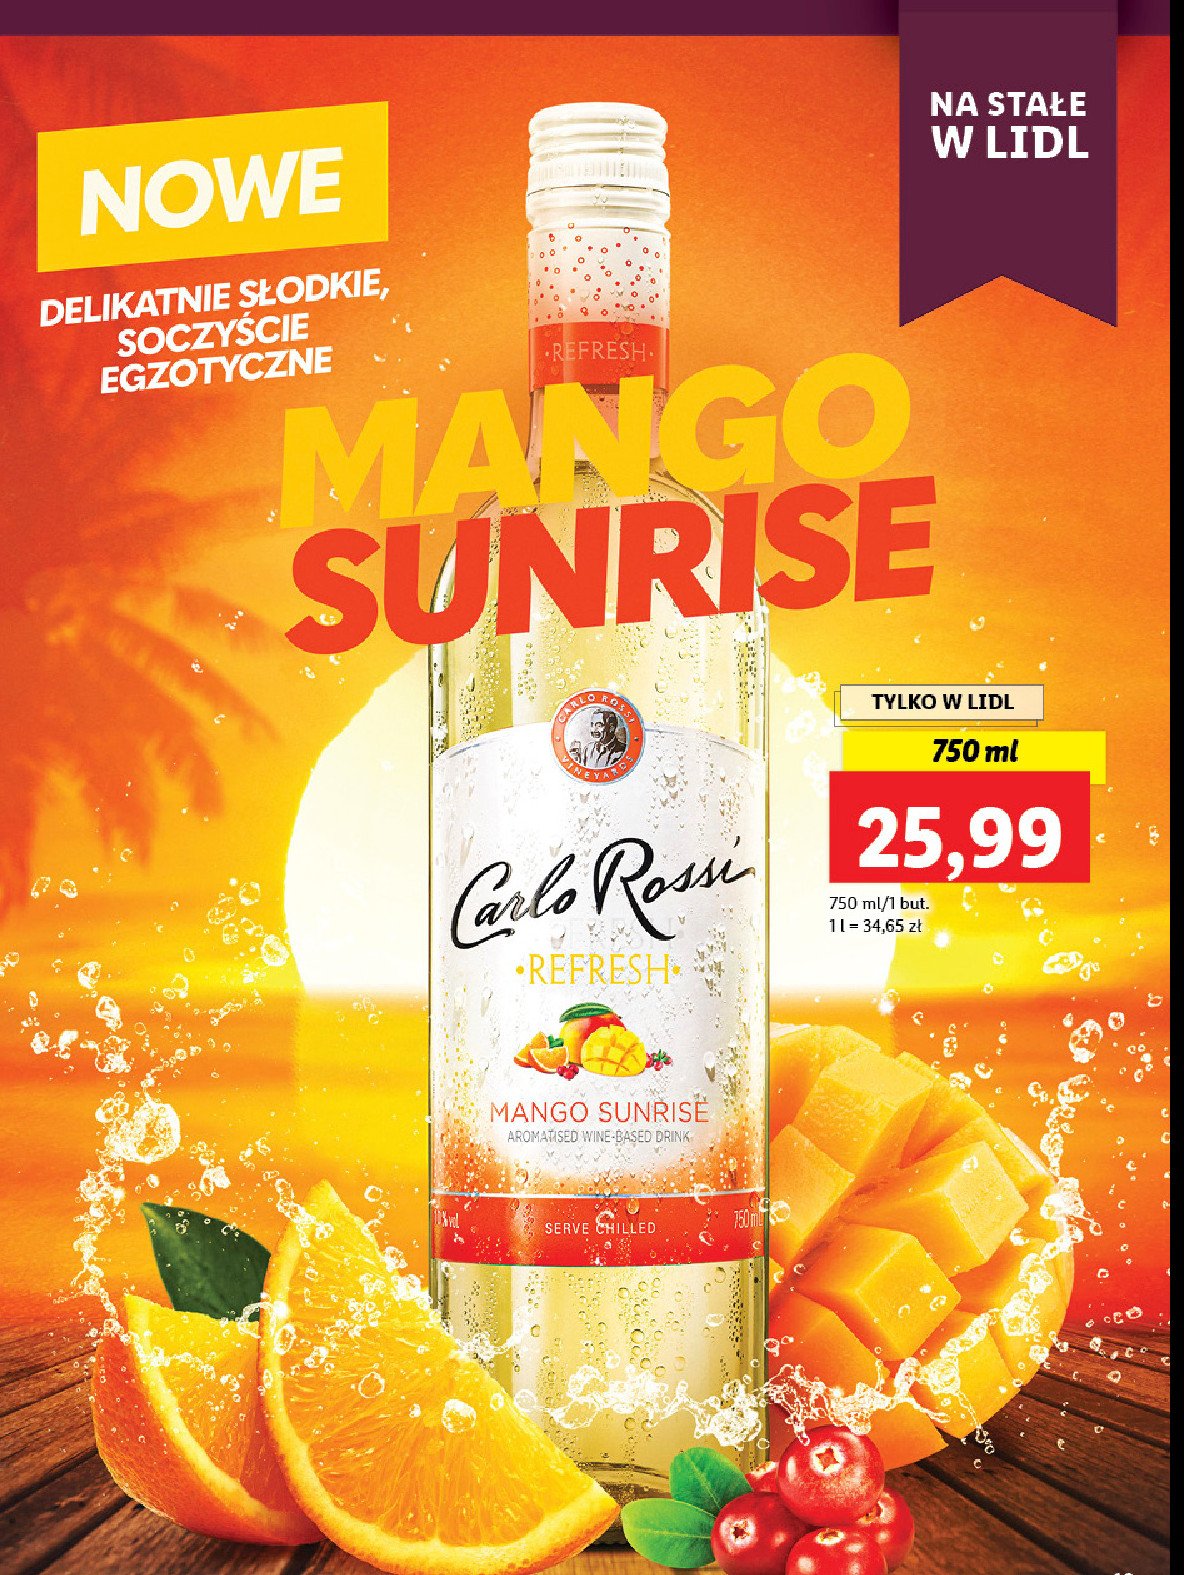 Wino Carlo rossi refresh mango sunrise promocja